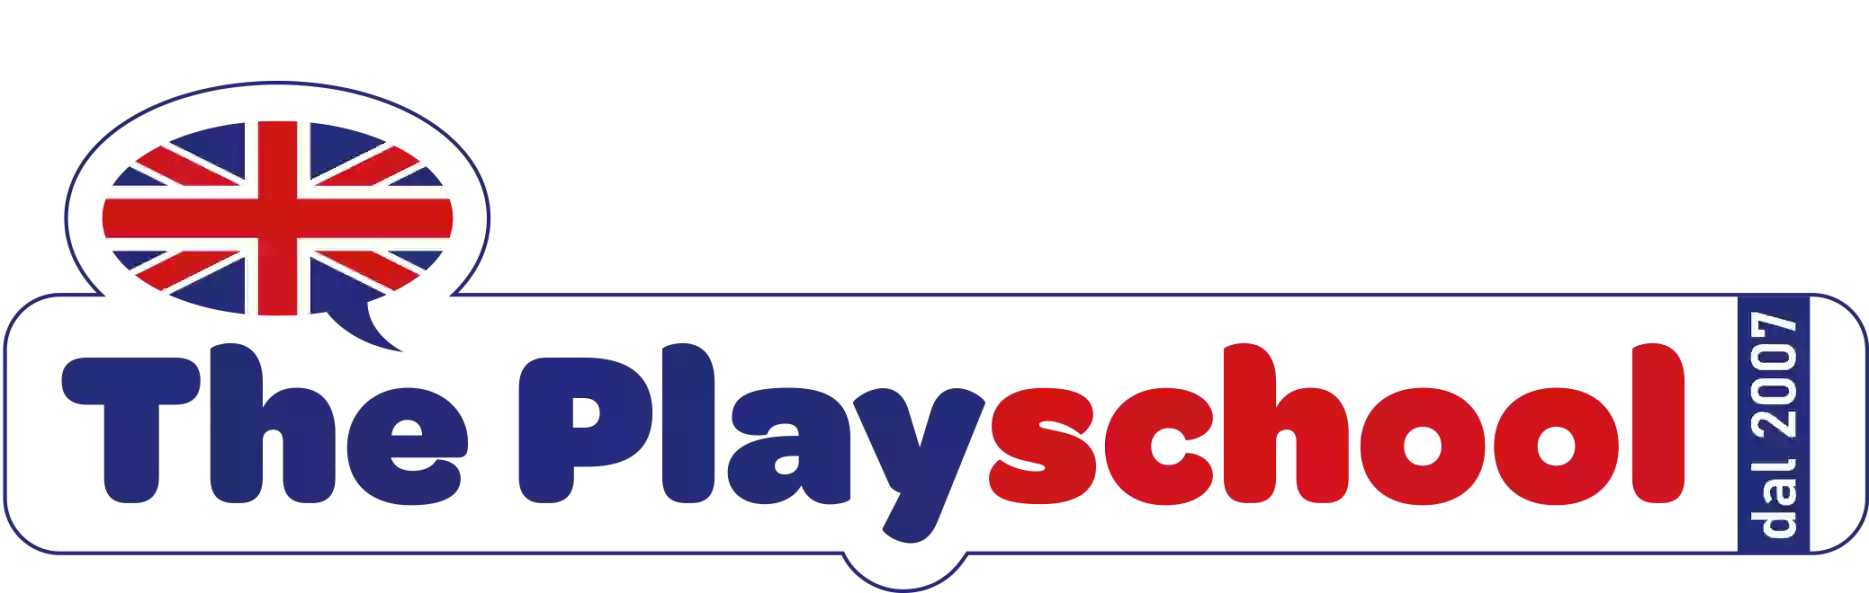 The Playschool